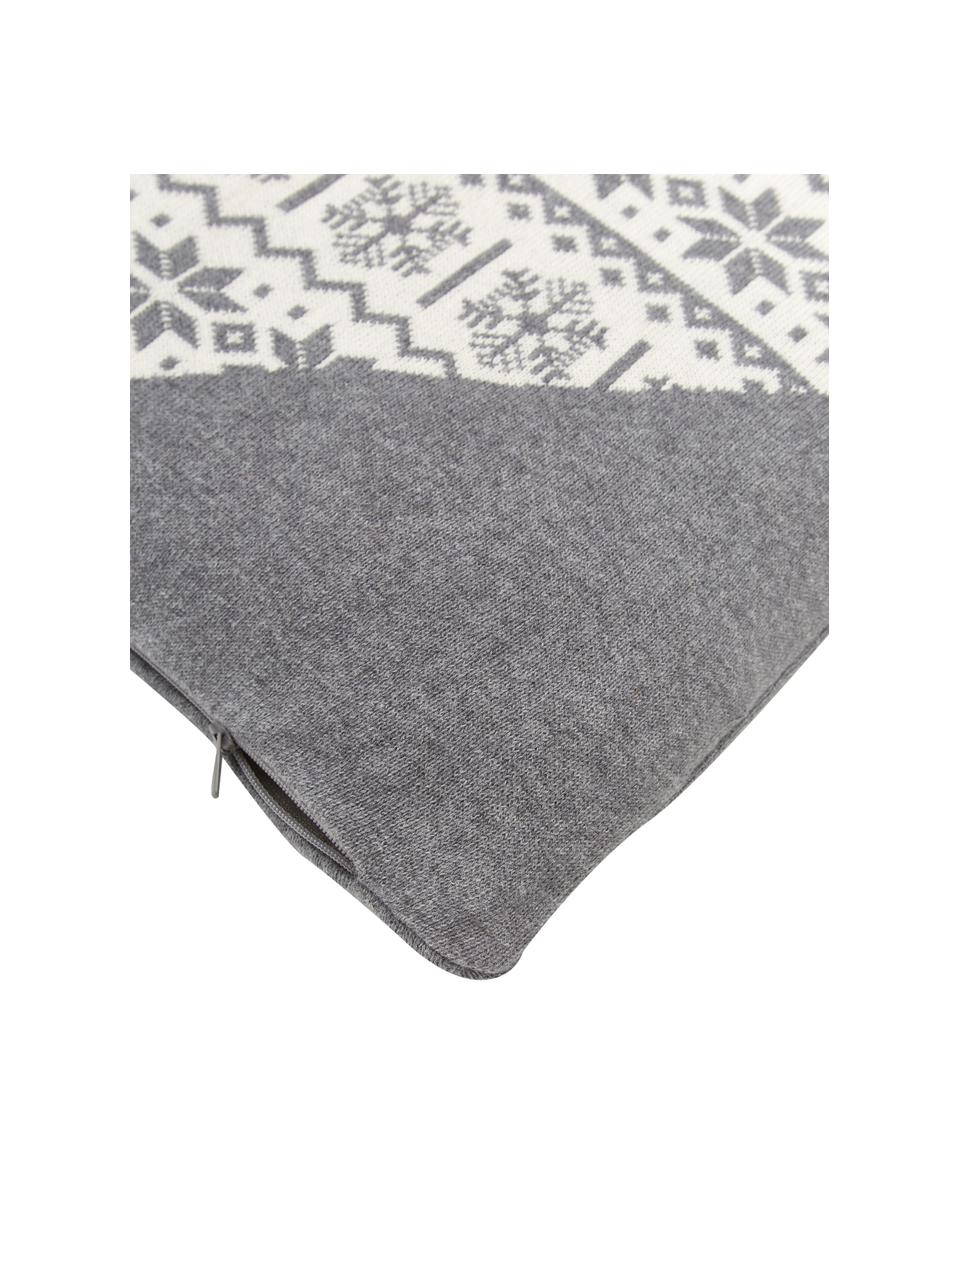 Strick-Kissenhülle Hjerte in Grau, 100% Baumwolle, Grau, Creme, B 40 x L 40 cm